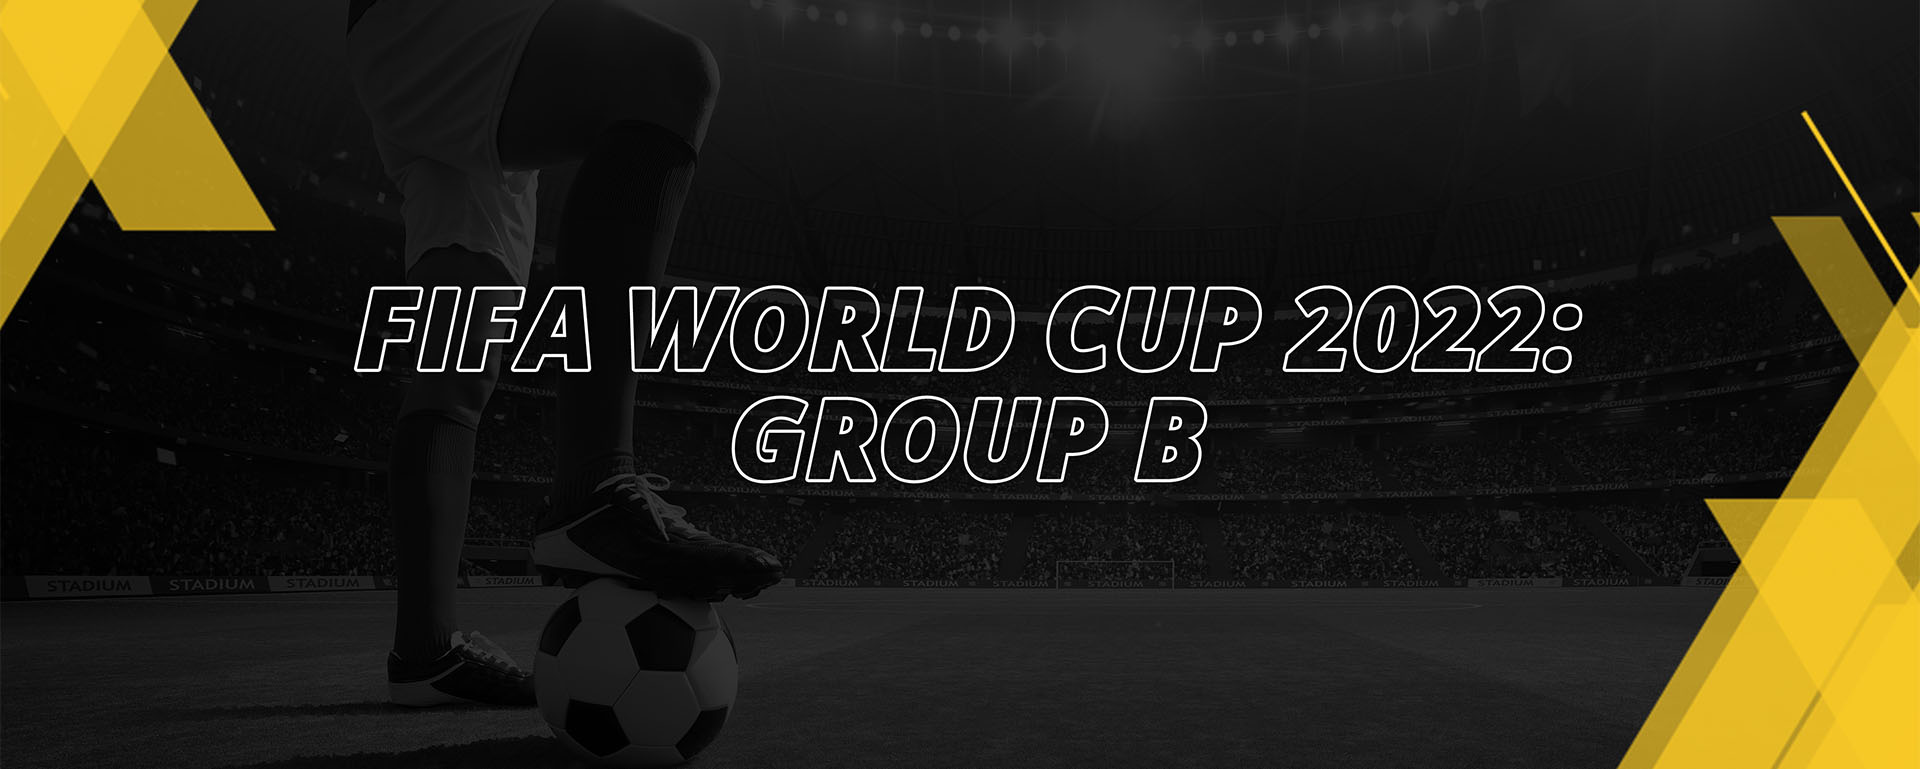 FIFA WORLD CUP GROUP B – QATAR 2022